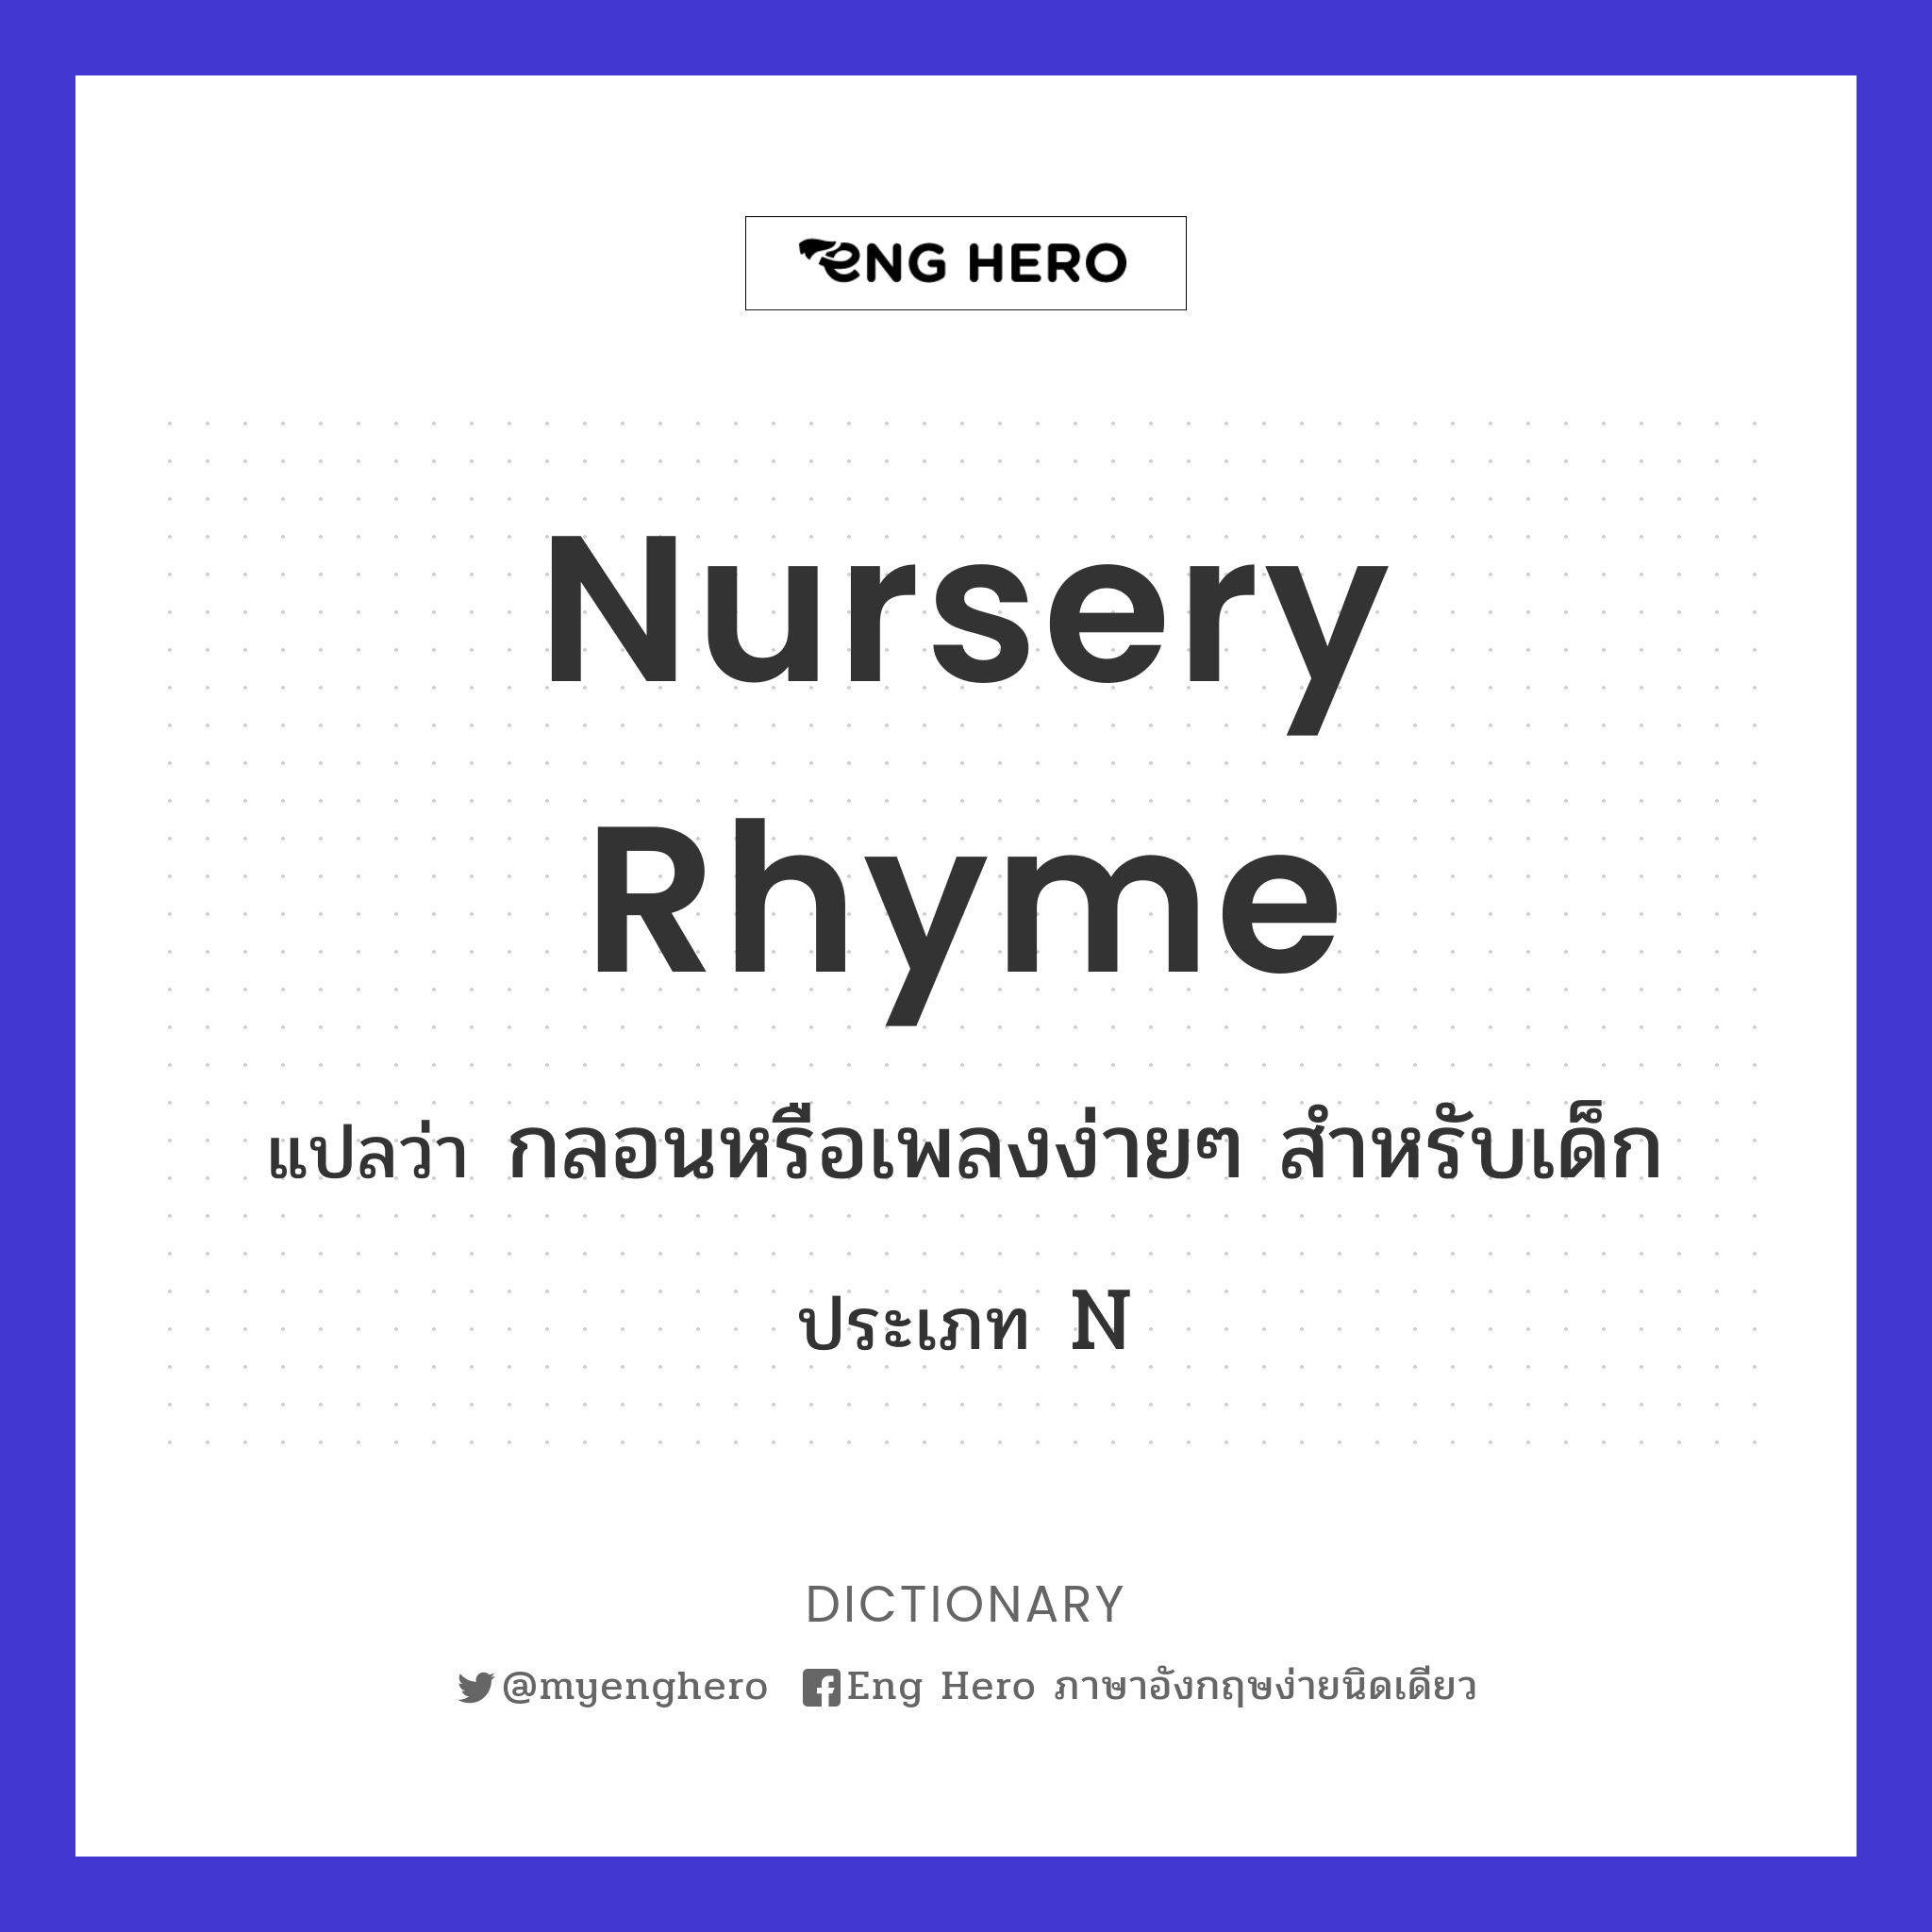 nursery rhyme